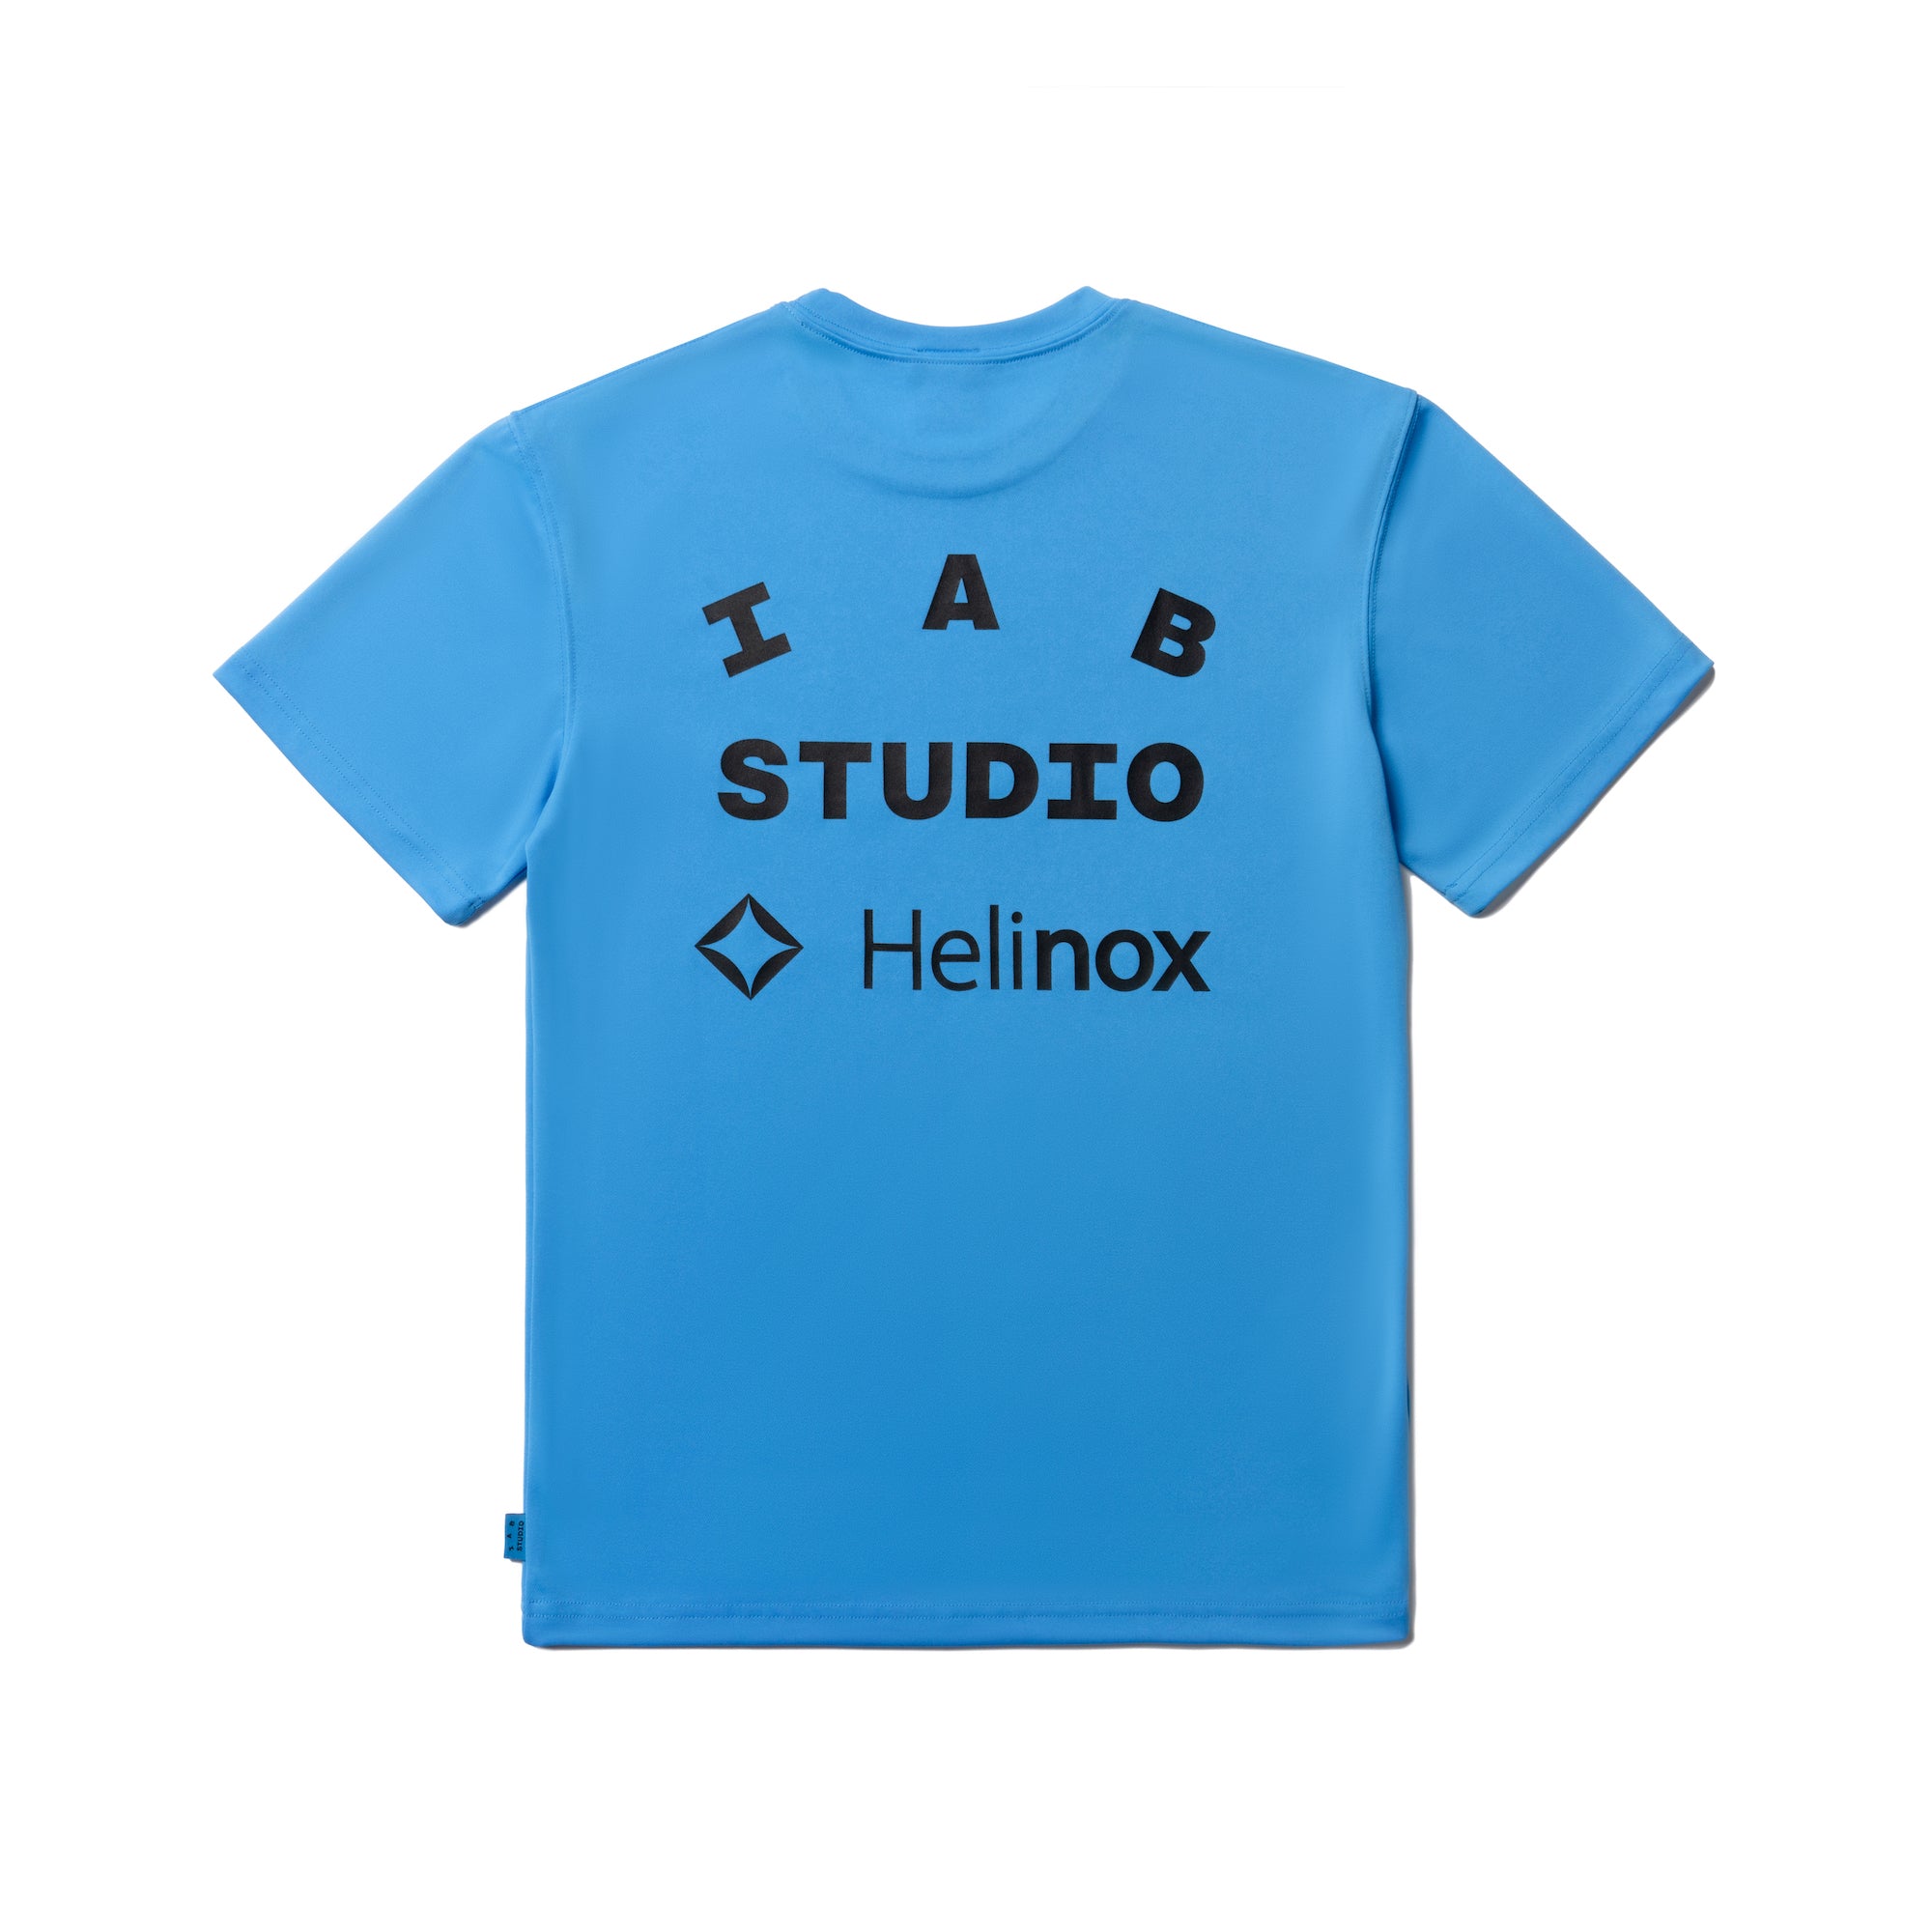 IAB STUDIO x Helinox T-Shirt - Cyan Blue